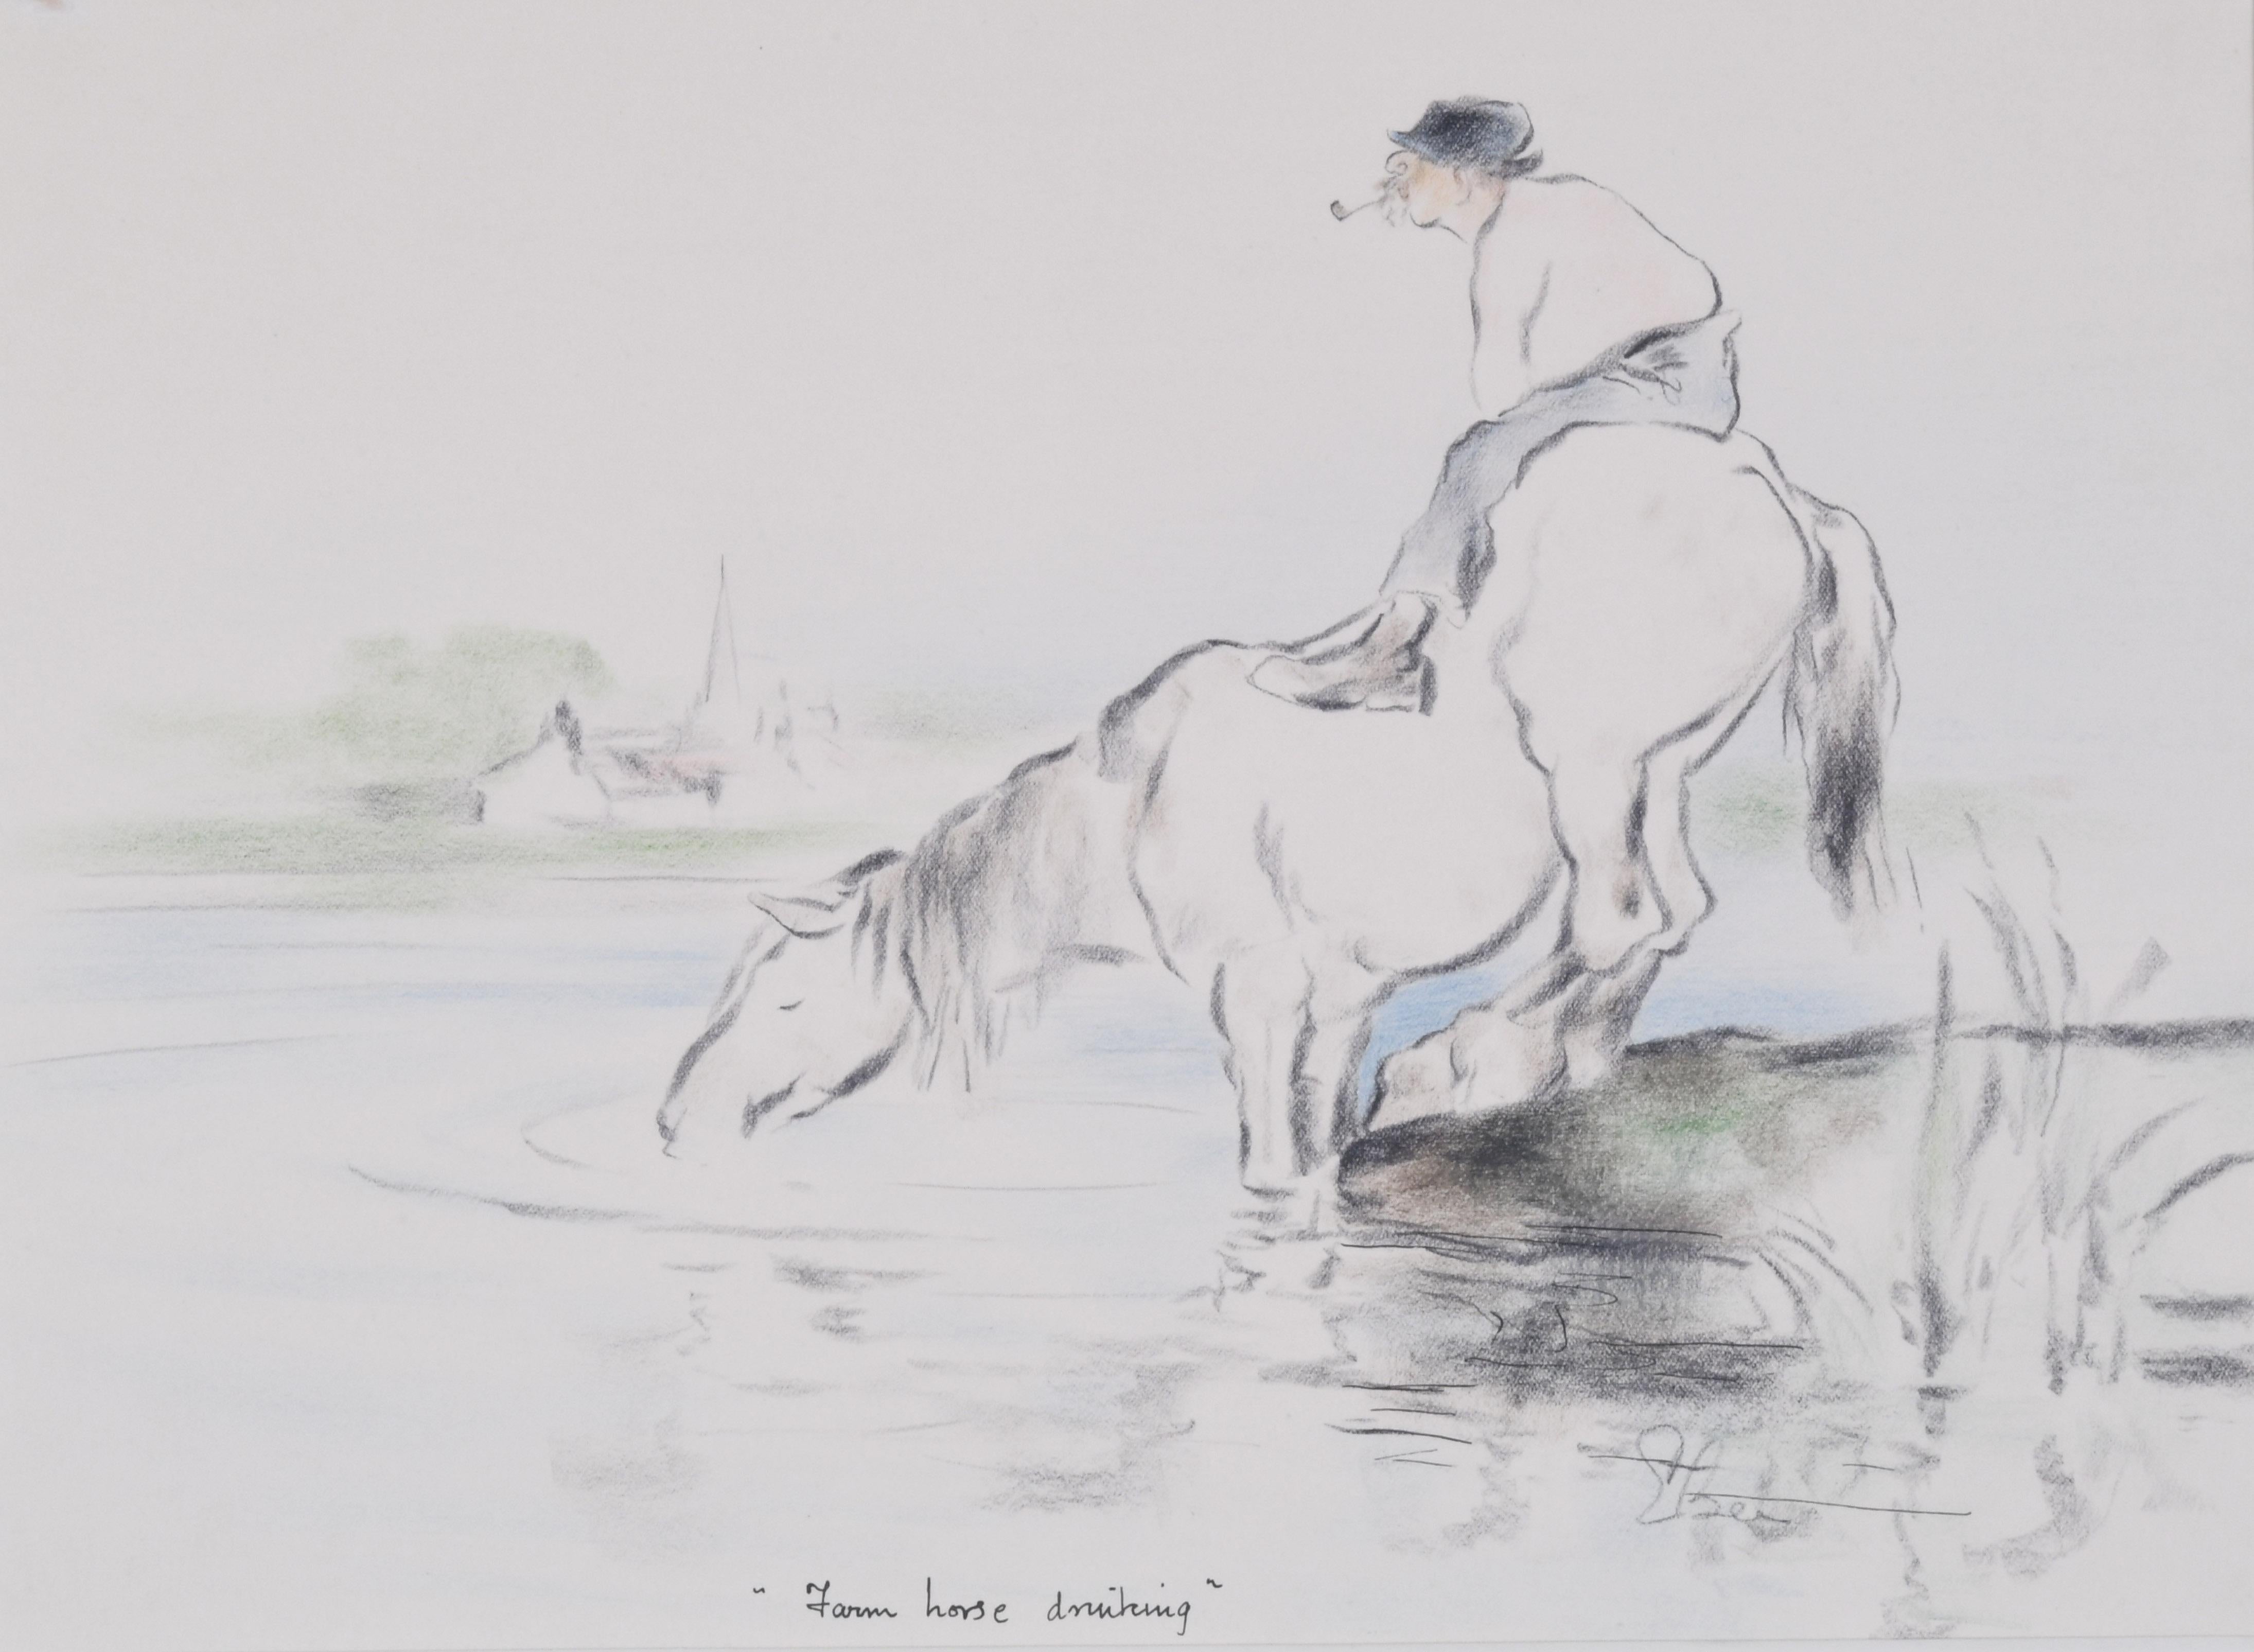 Edmund Blampied Animal Art - Farm Horse Drunking